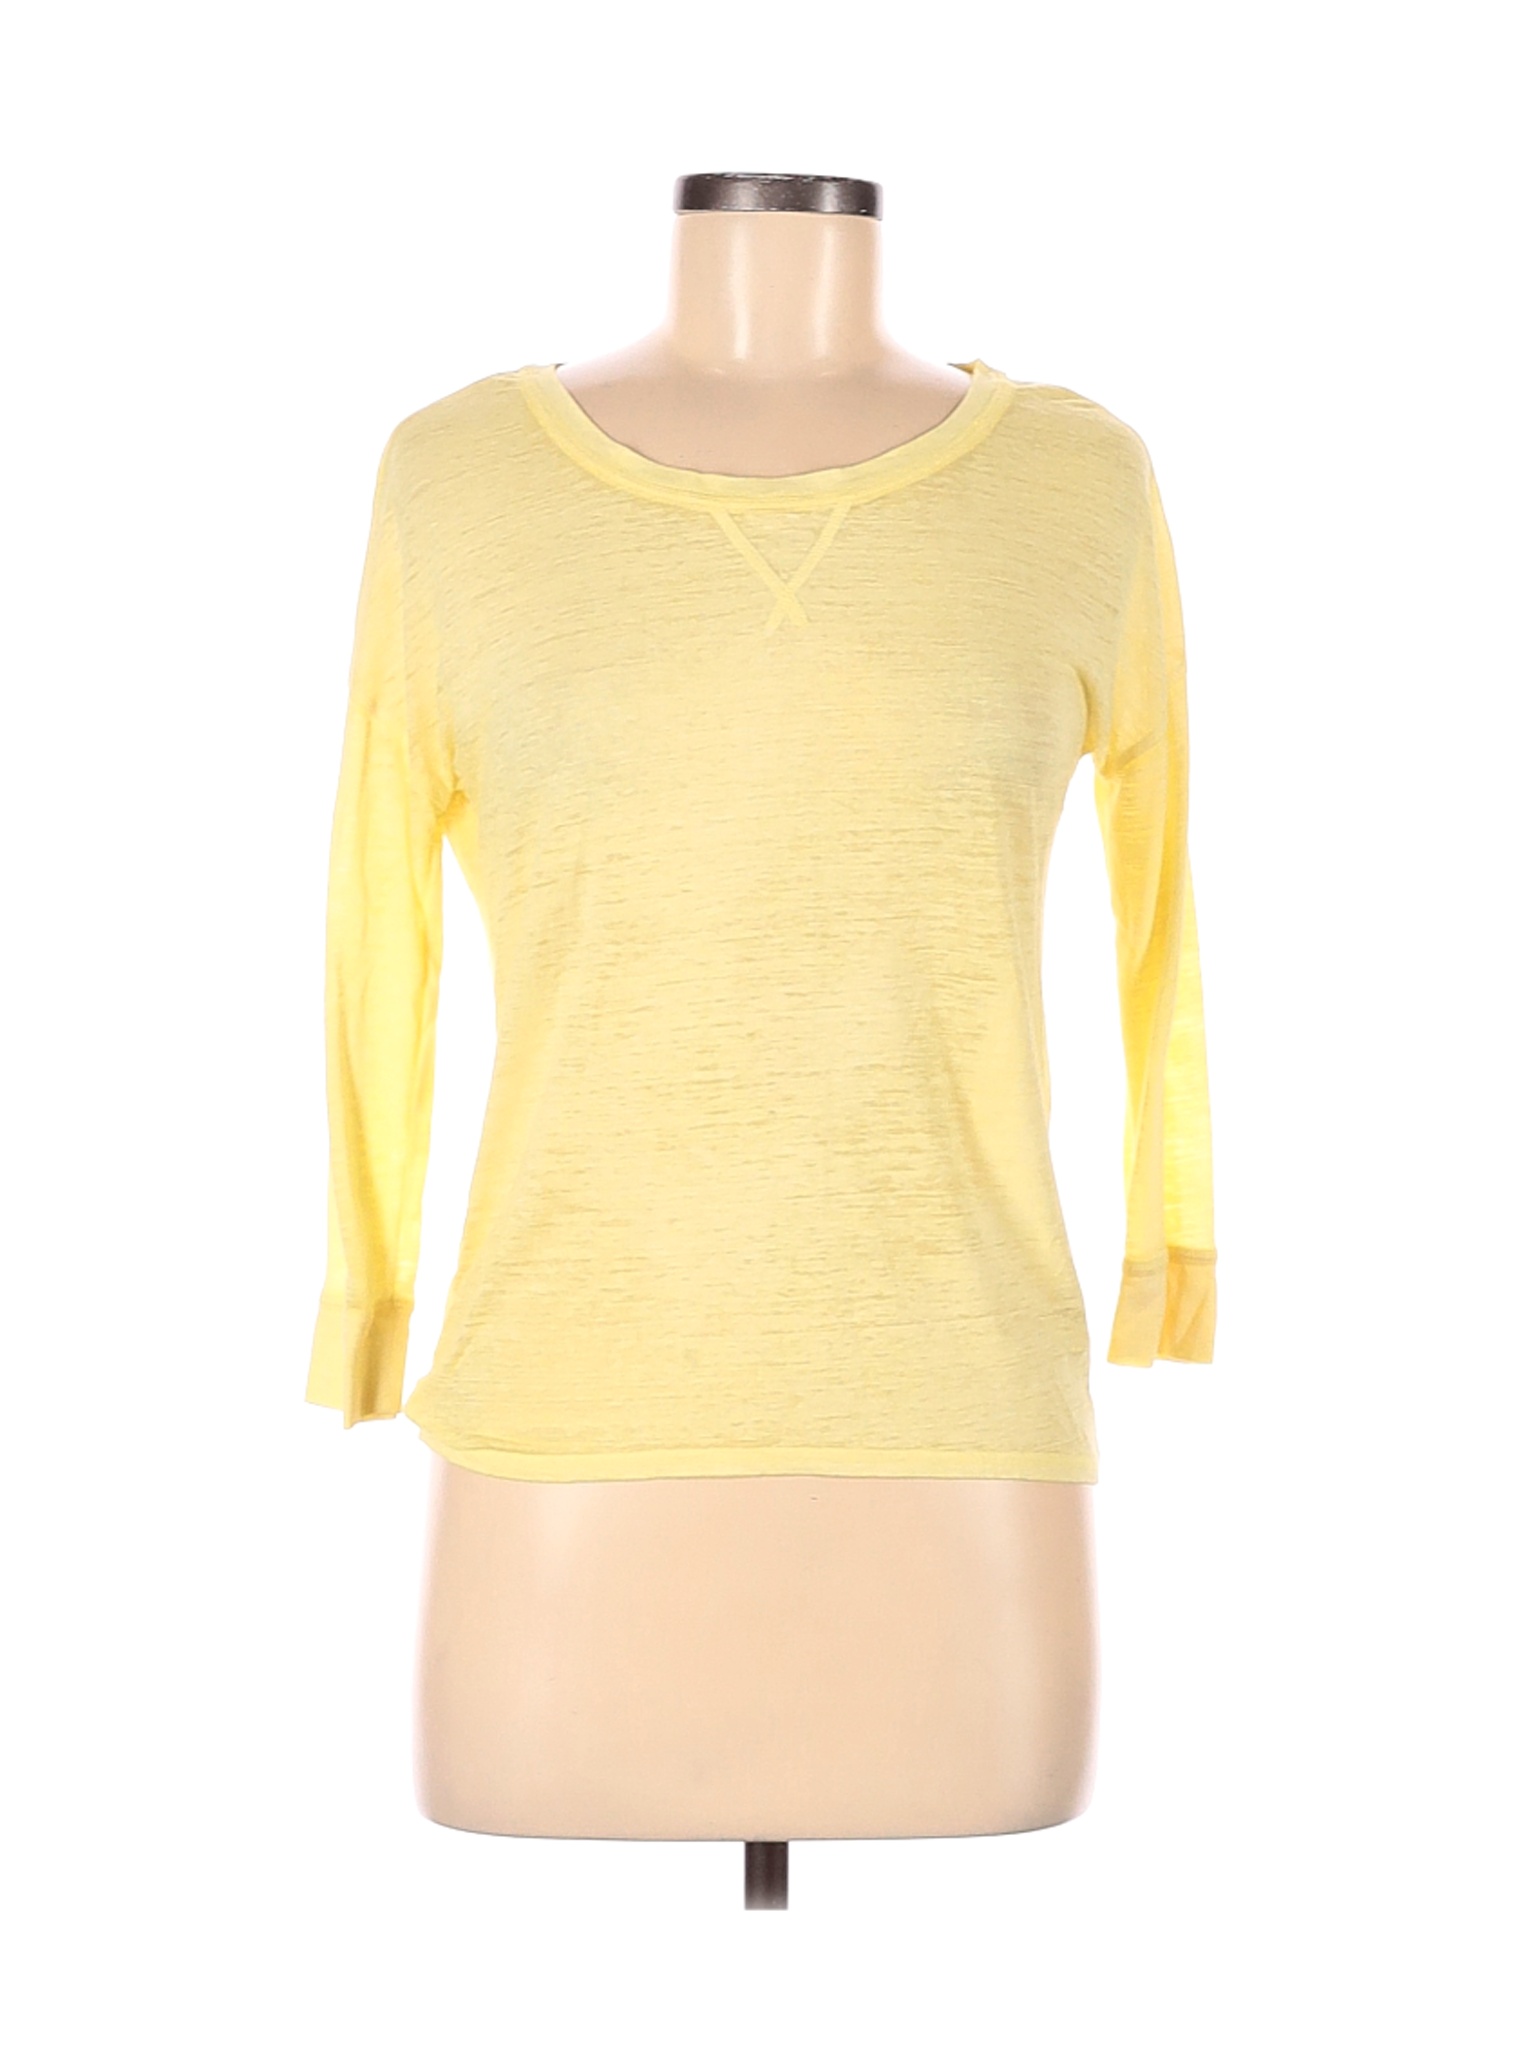 Arizona Jean Company Women Yellow Long Sleeve T-Shirt M | eBay